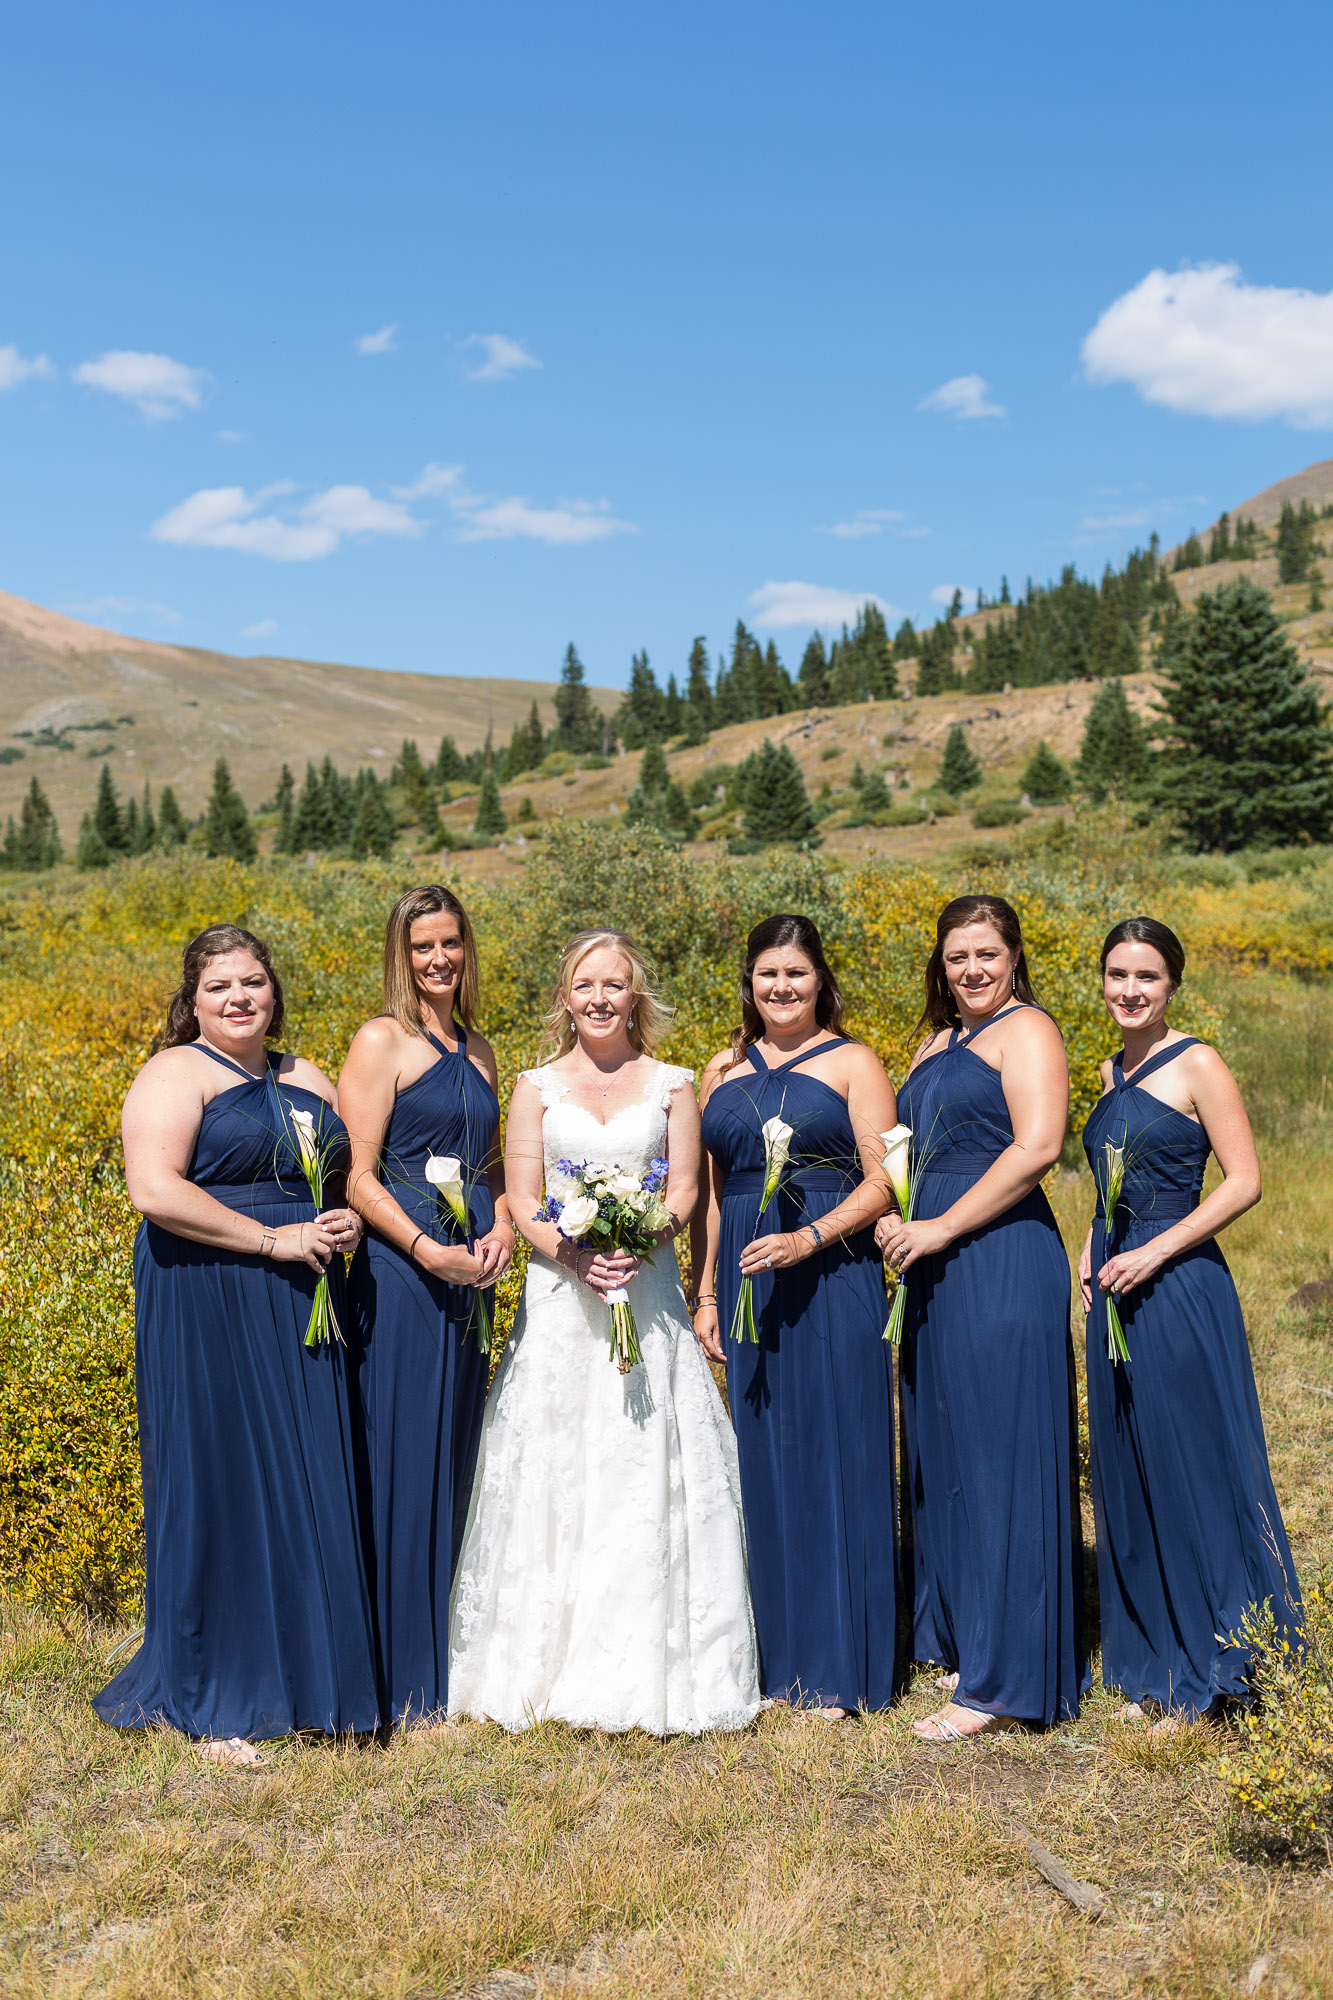 Main Street Station Breckenridge, Colorado Wedding -- Gorgeous Wedding Photos - The Overwhelmed Bride